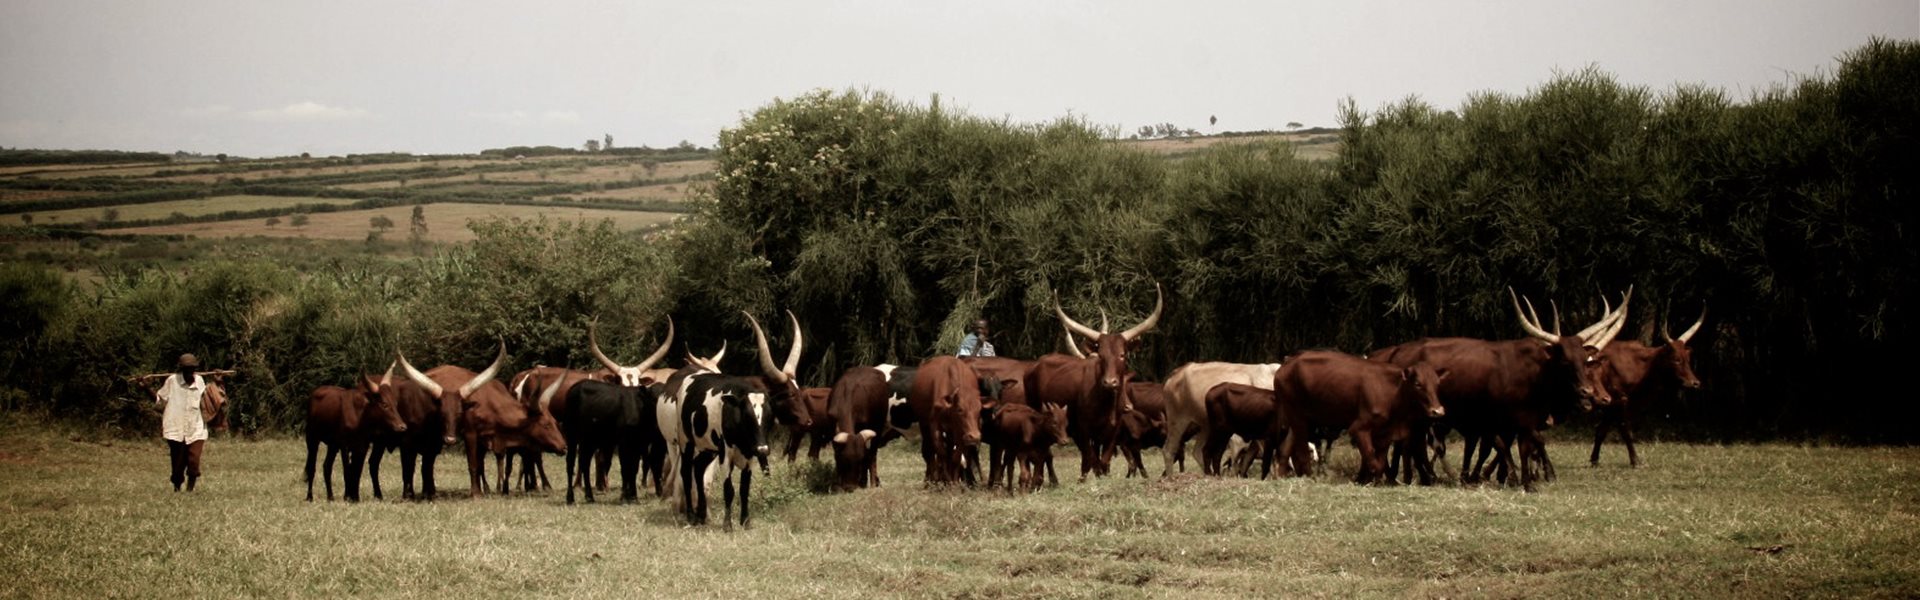 uganda-countryside-cattle